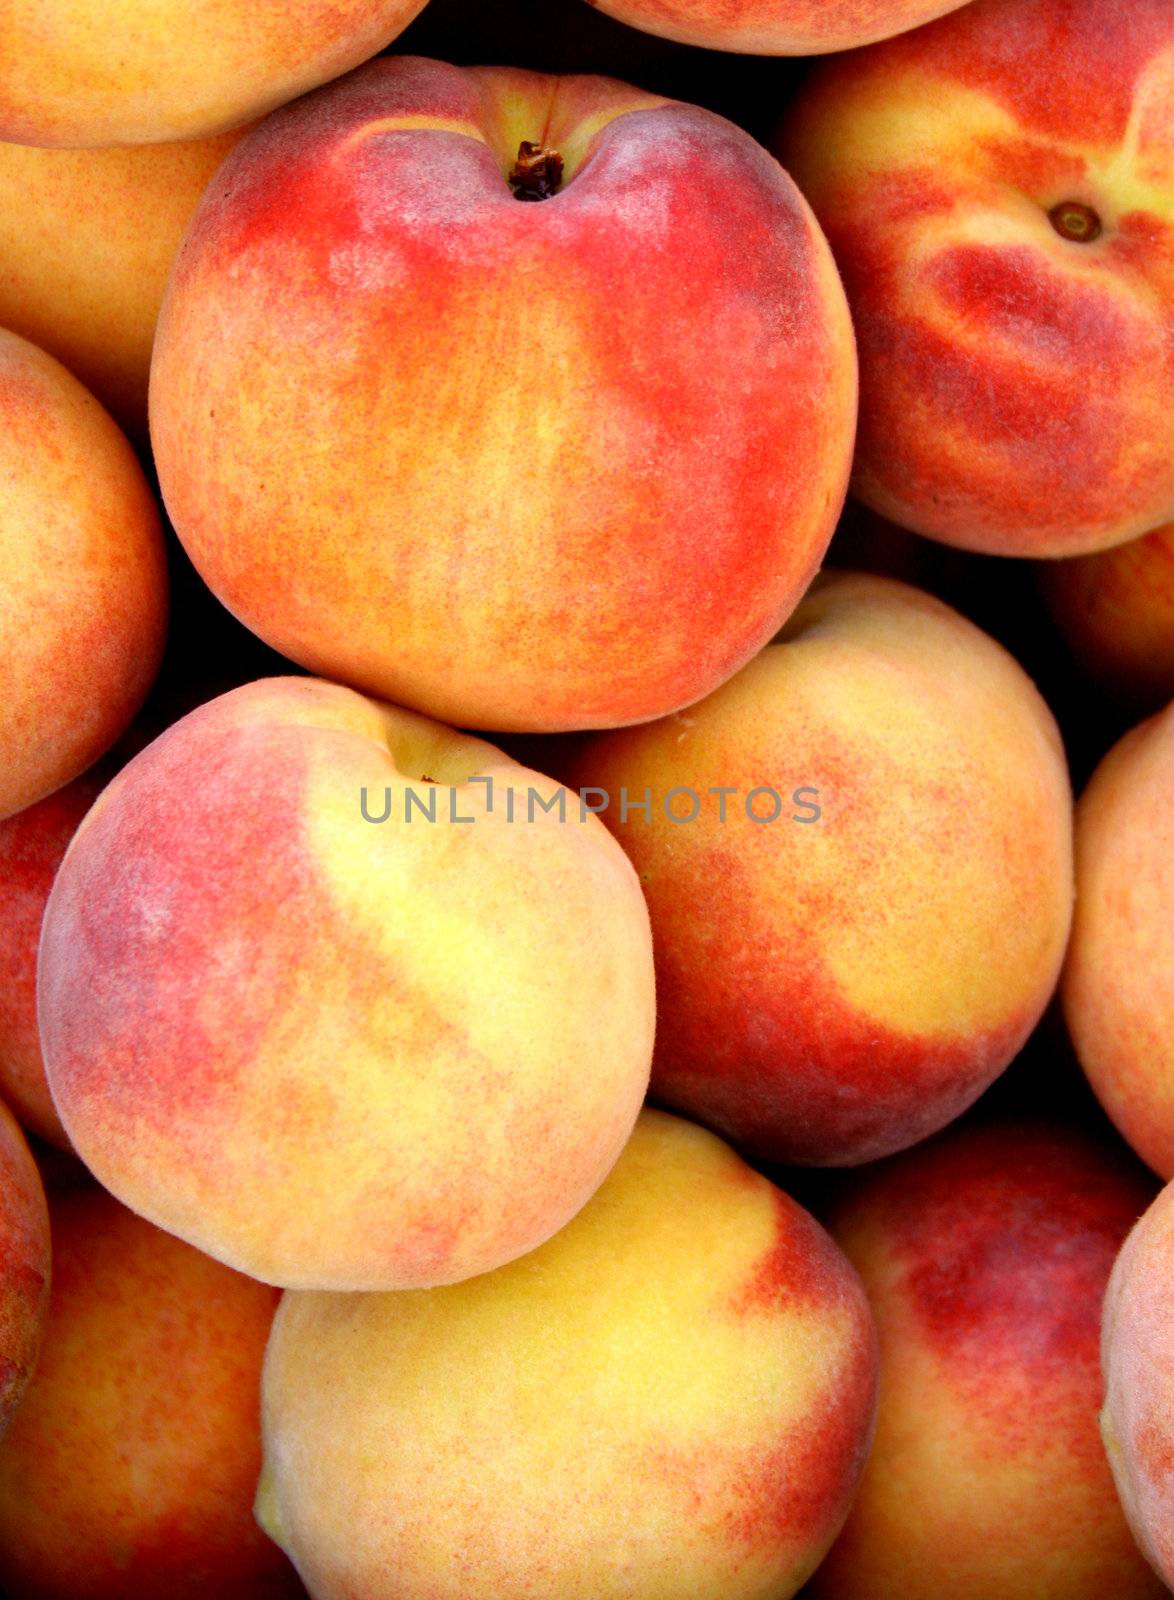 Peaches by thephotoguy